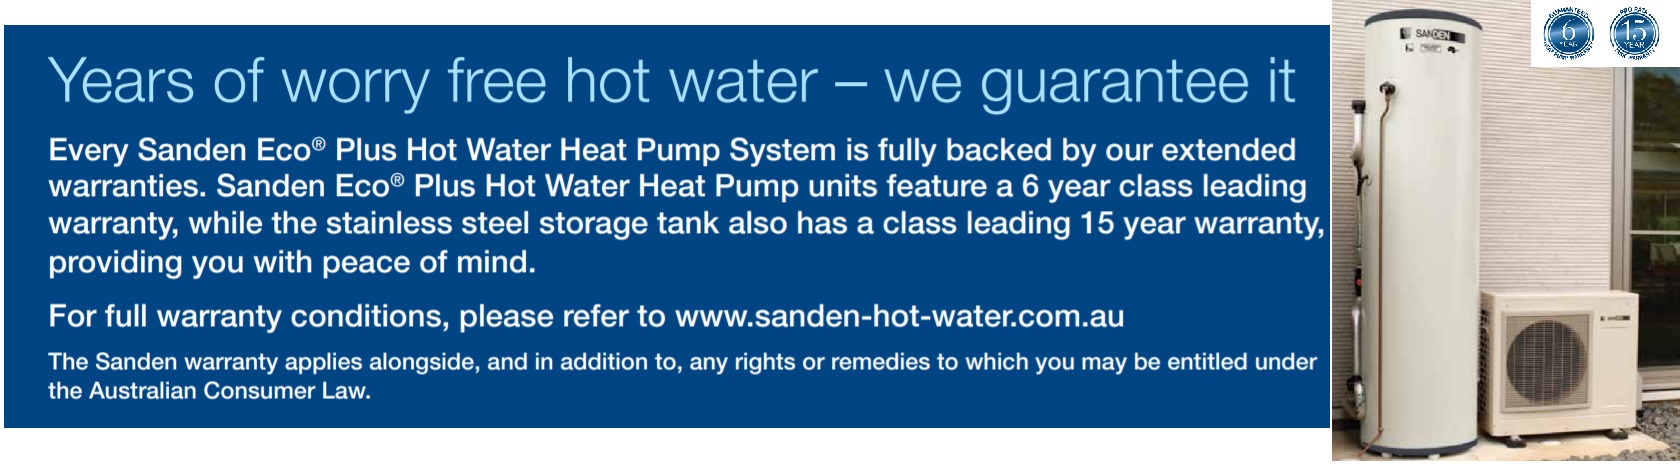 Sanden Eco Plus Heat Pump - Superior Features and Benefits